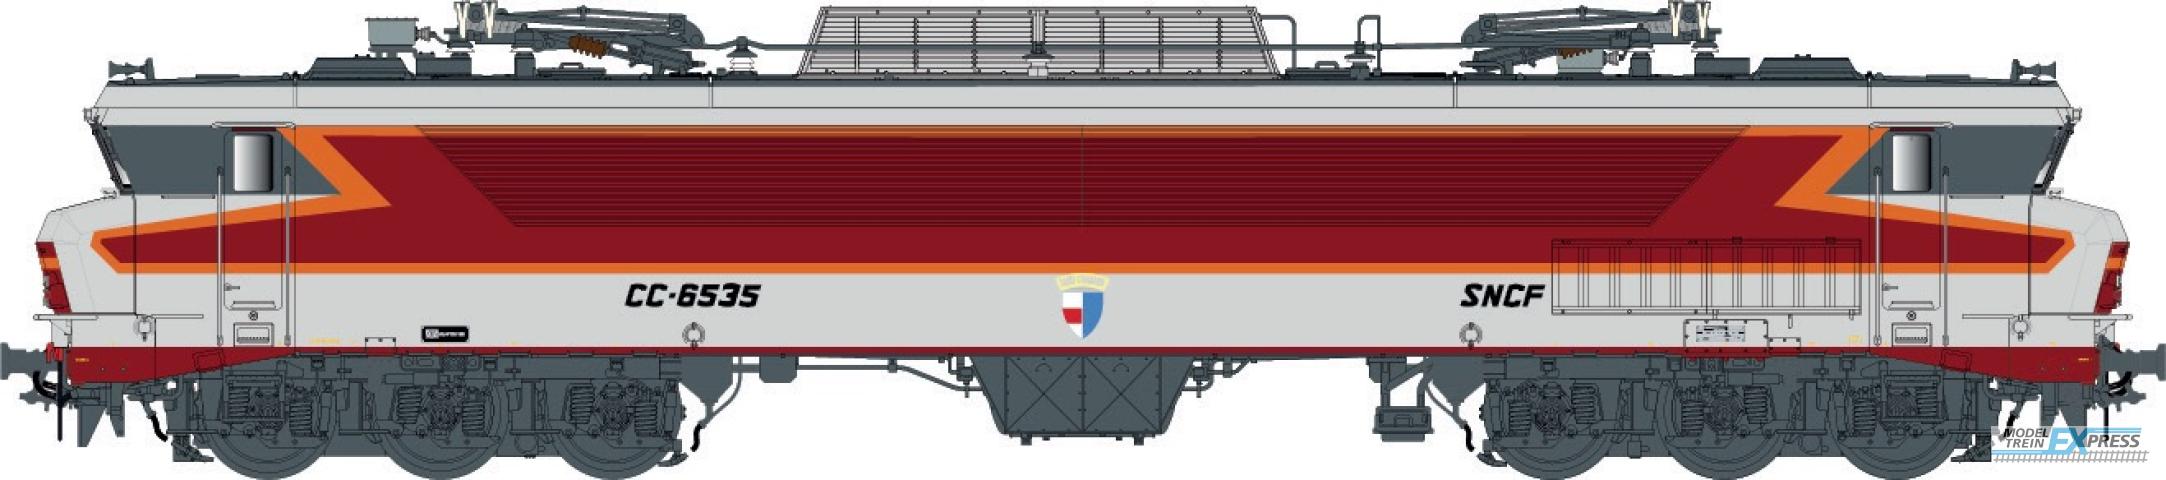 LS Models 10831S CC 6535, greymetalic, livery ARZENS, Lyon Mouche depot, 200 Km/h  /  Ep. IV  /  SNCF  /  HO  /  AC SOUND  /  1 P.